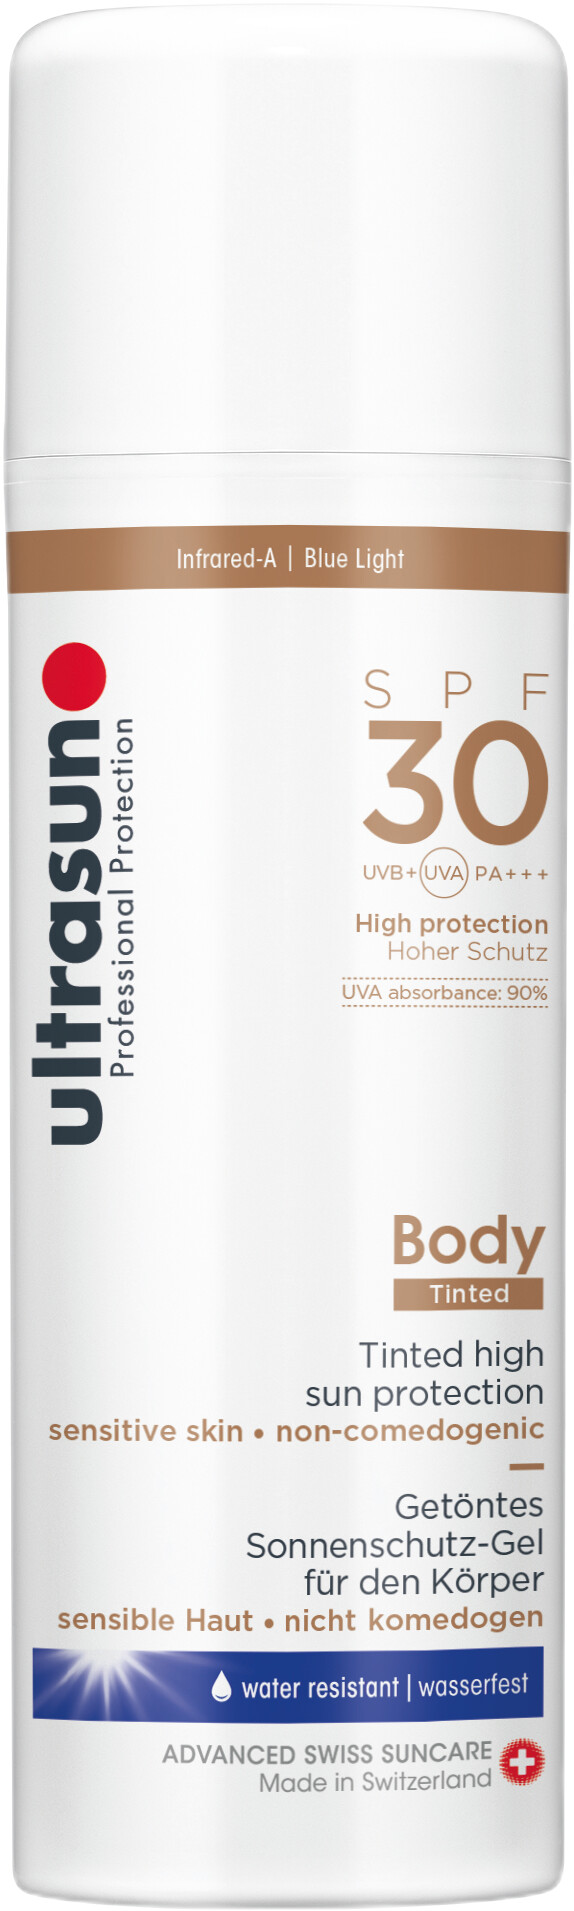 Ultrasun Tinted Body SPF30 150ml Honey